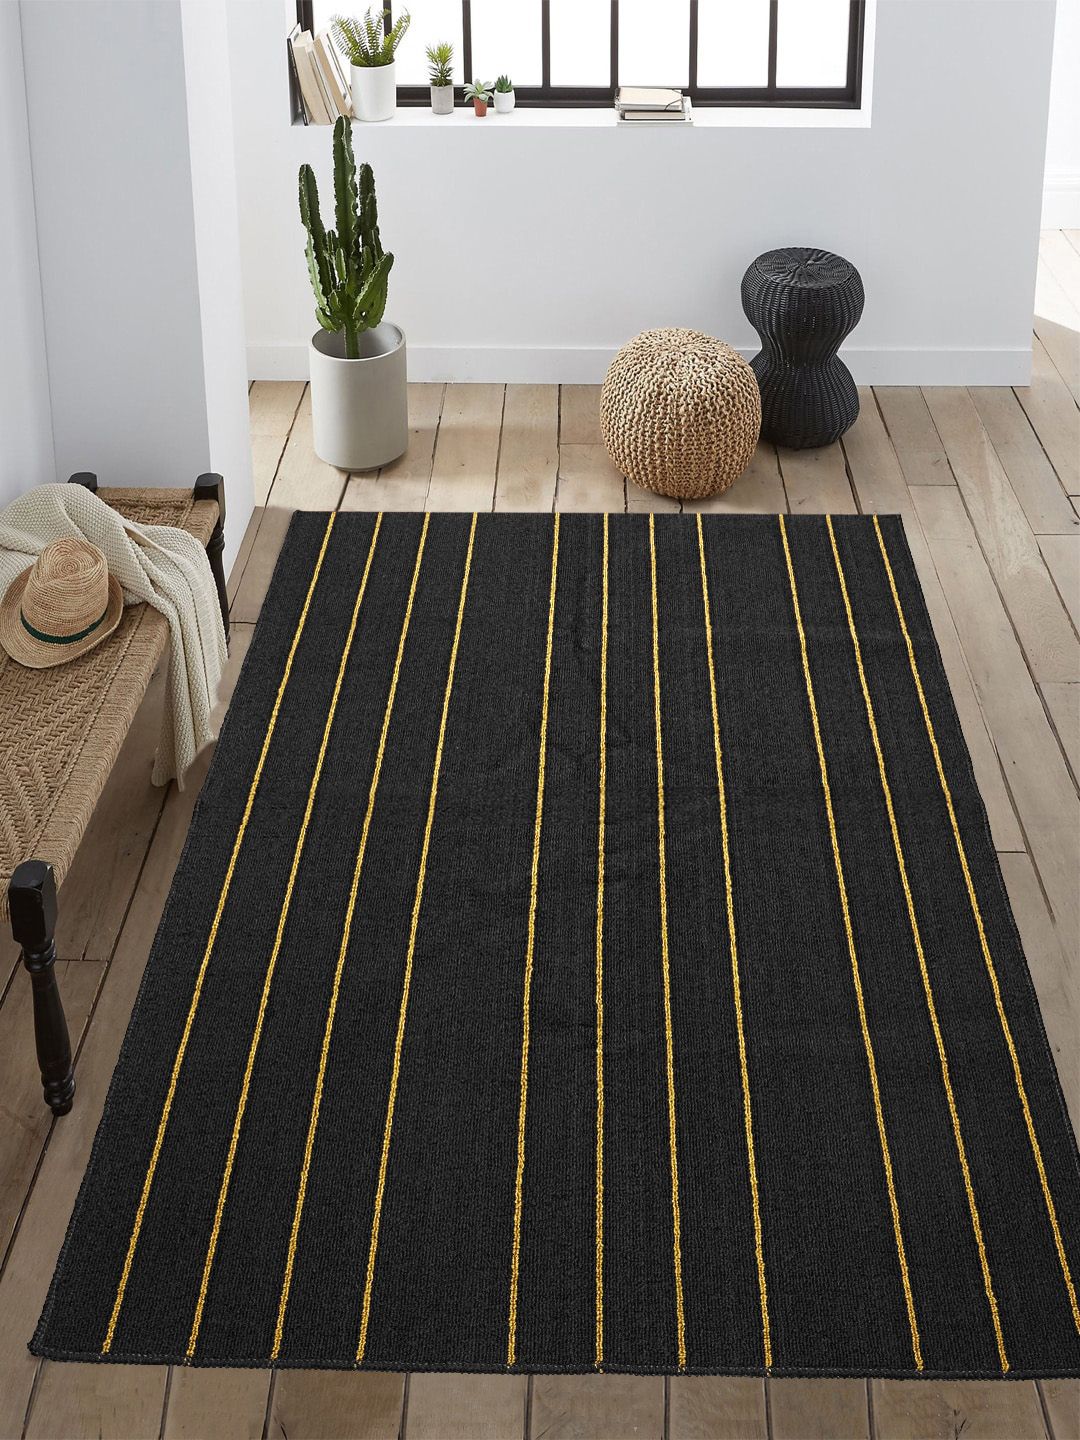 Saral Home Black & Yellow Striped Polypropylene Carpet Price in India